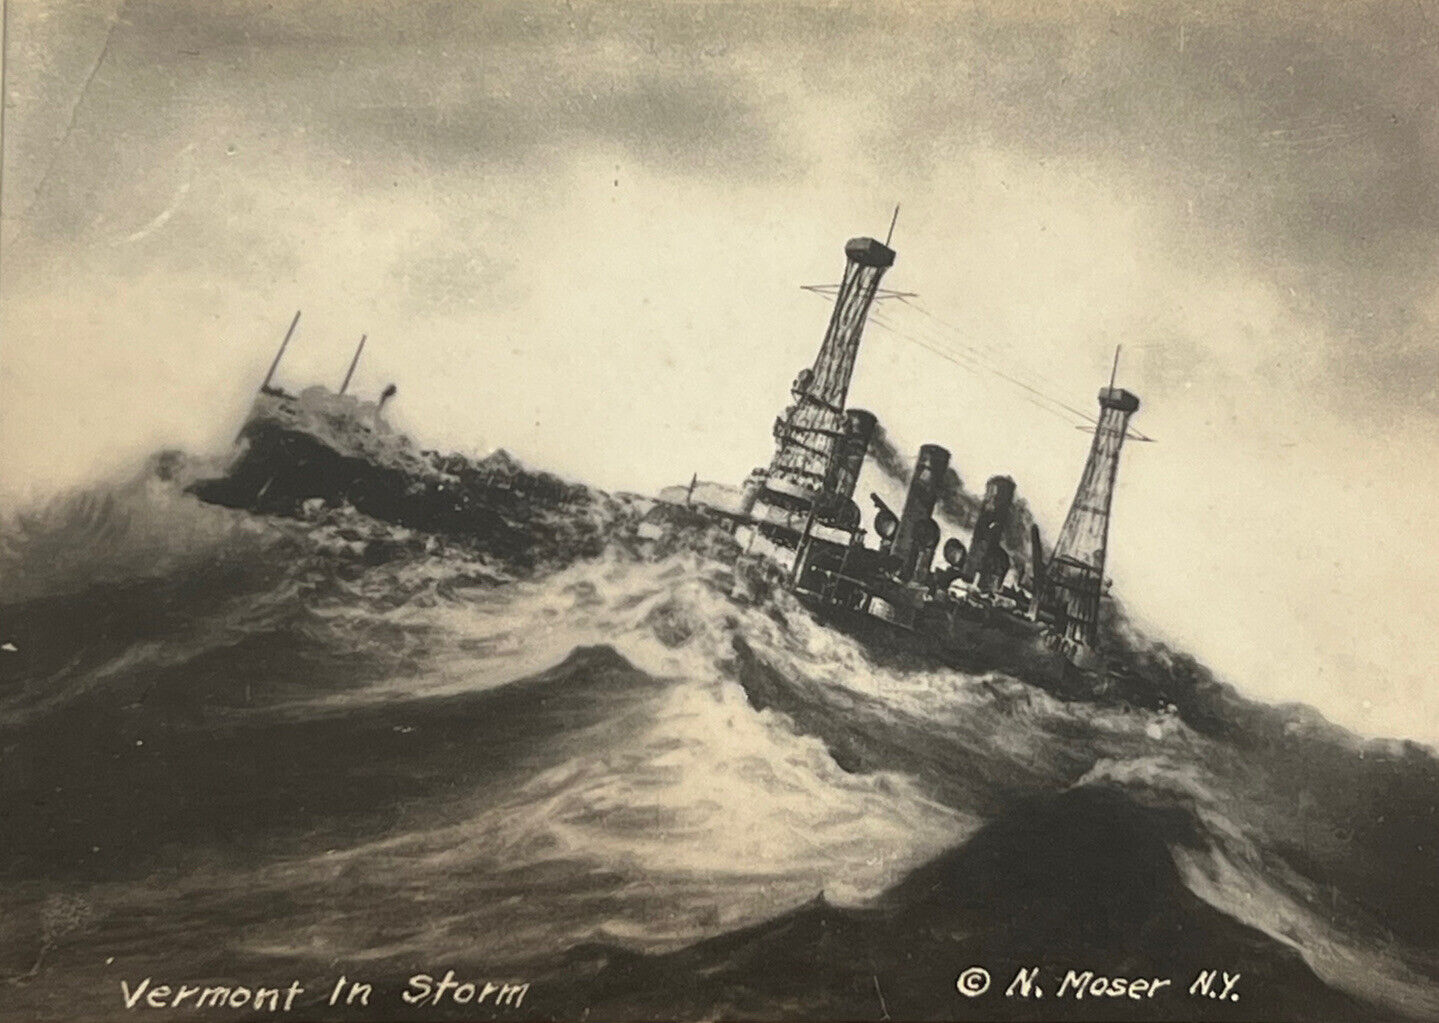 WWI RPPC Uss ￼Vermont In Storm￼ Navy ￼￼Battleship￼￼￼ World War 1 postcard Photo